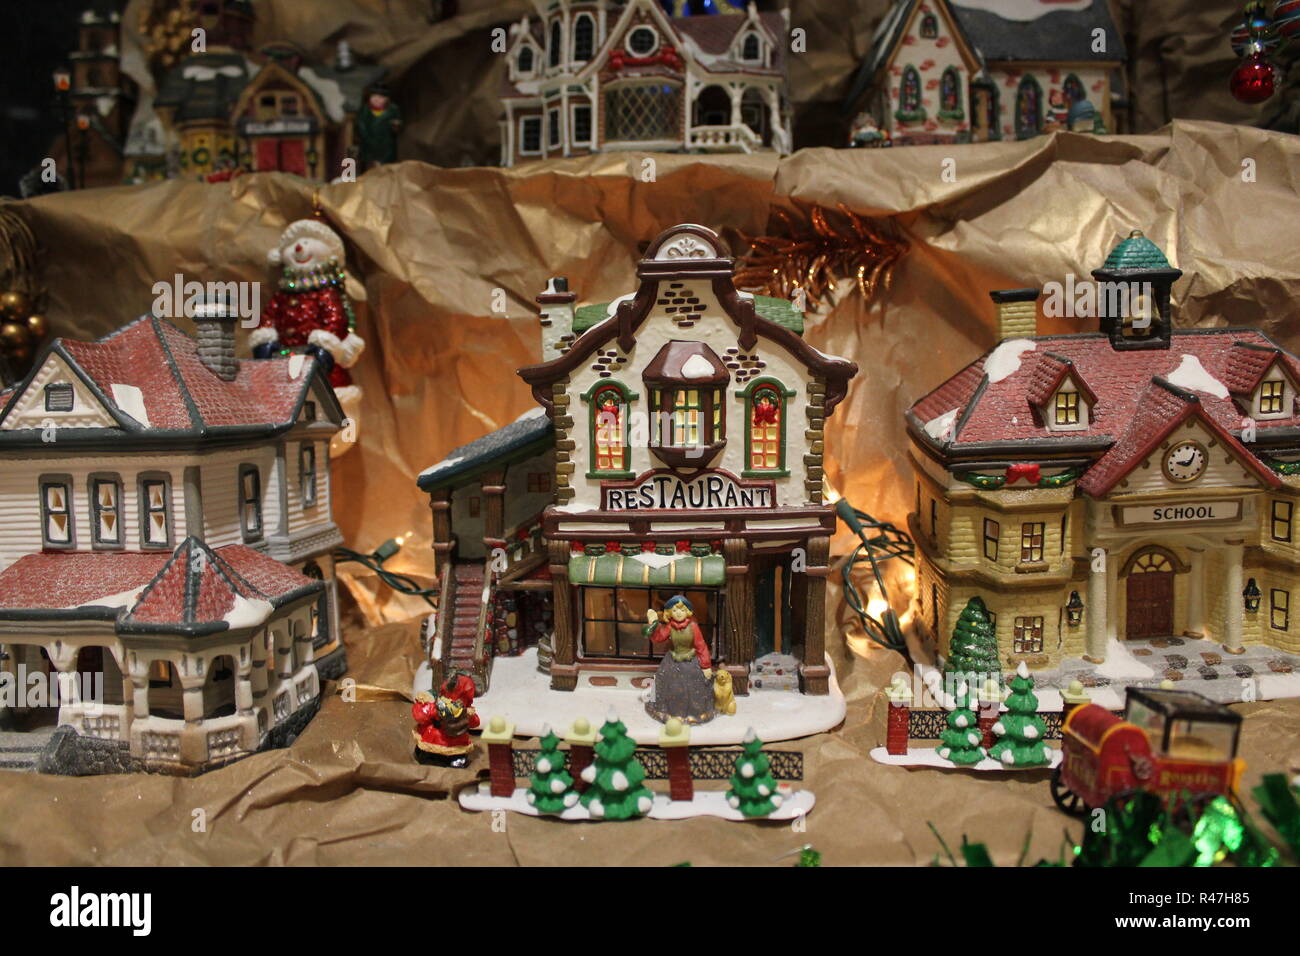 Miniature ceramic restaurant displayed as Christmas holiday ornamental decorations. Stock Photo